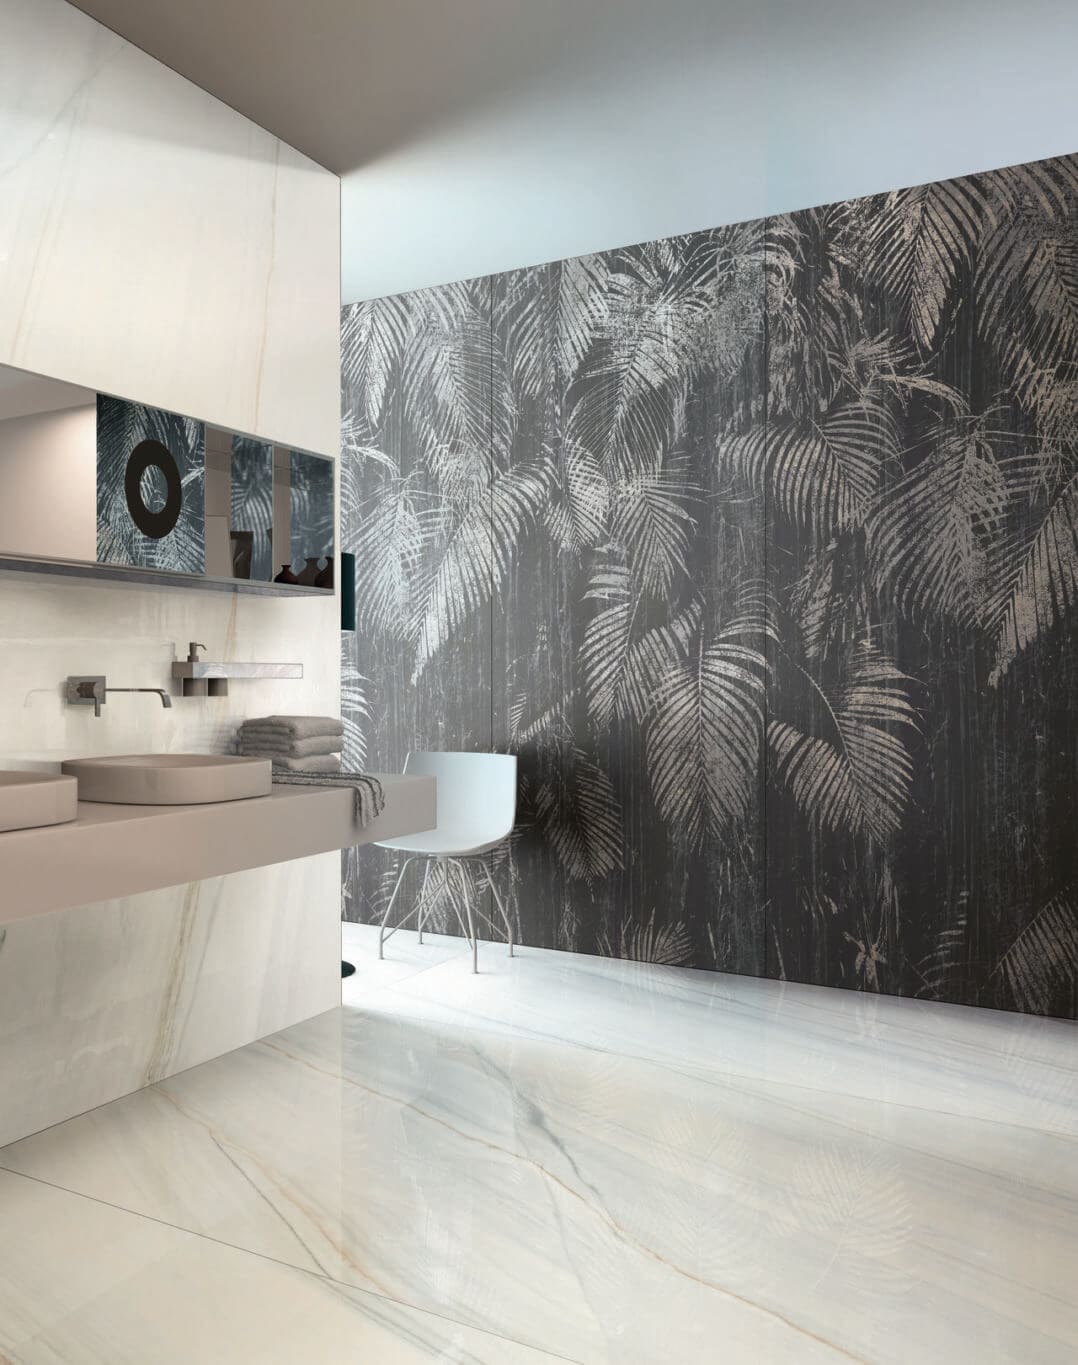  gauged porcelain tile panels/slabs with palm tree shapes for bathroom